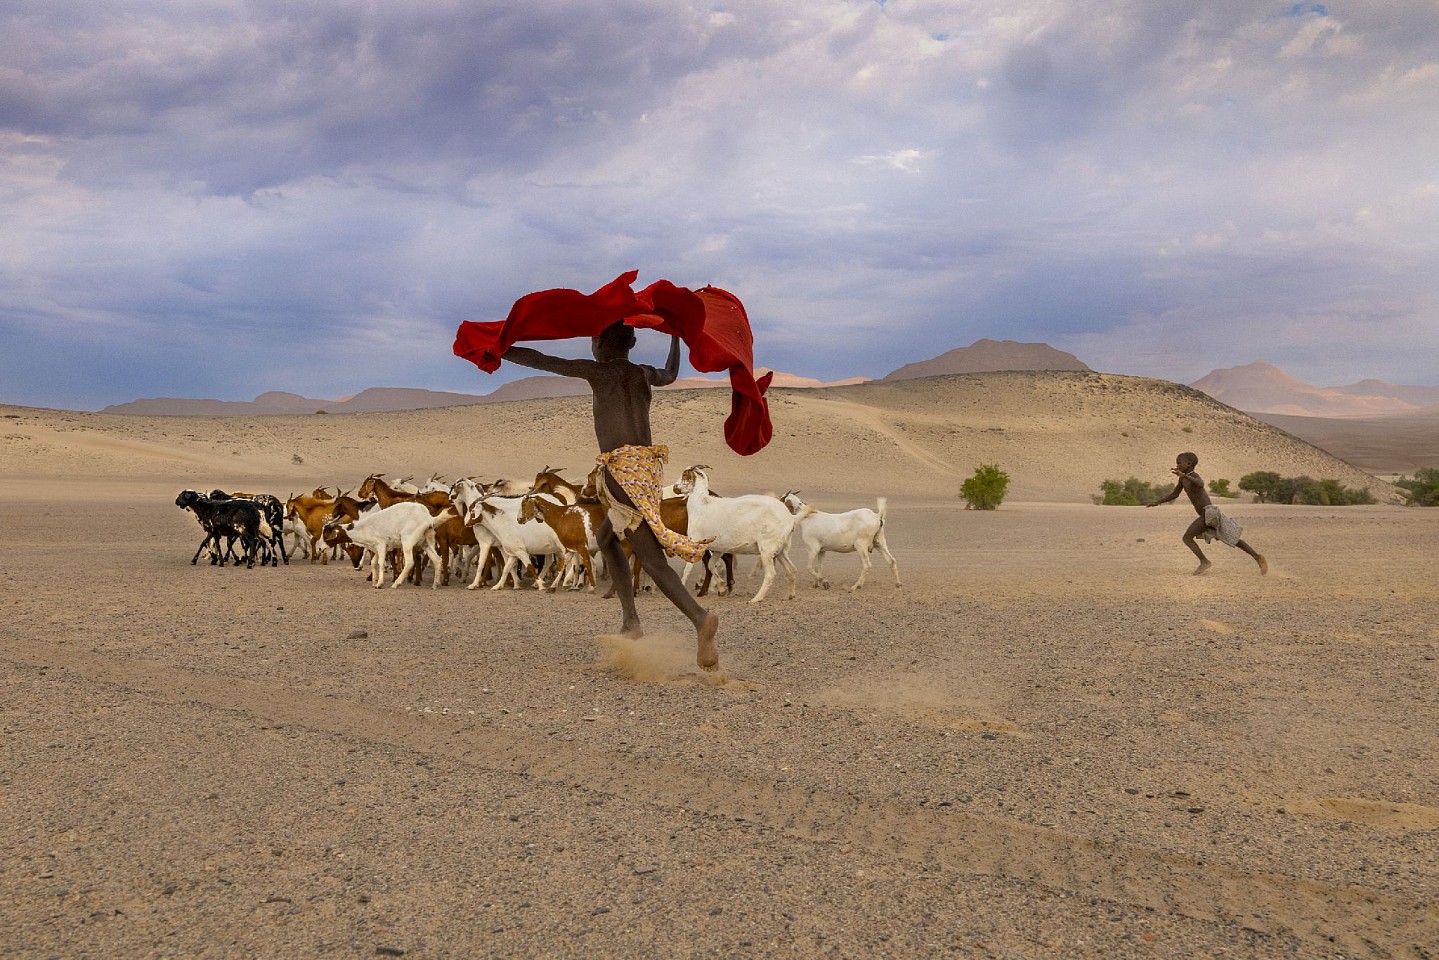 Steve McCurry, Himba Shepherds Take Their Goats to Graze, Ed. of 30
FujiFlex Crystal Archive Print, 20 x 24 in. (50.8 x 61 cm)
NAMIBIA-10004